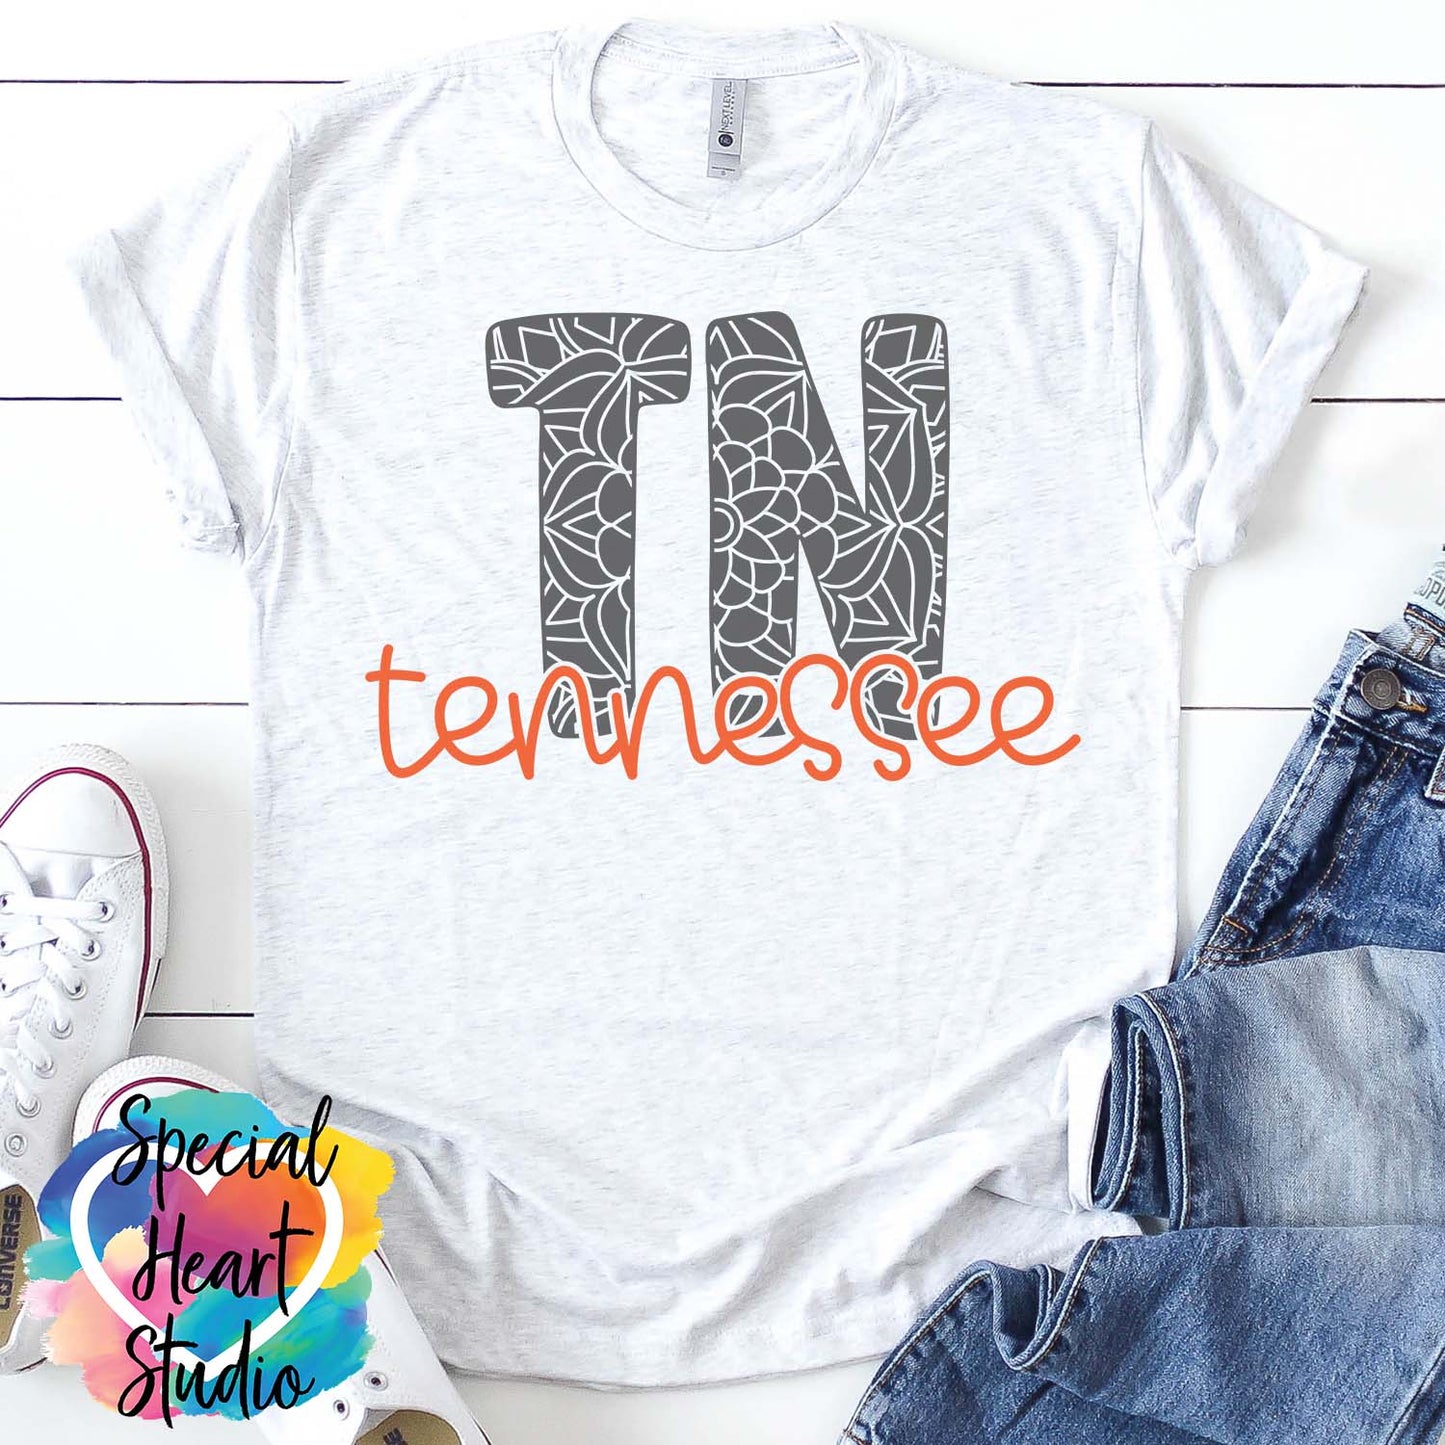 Tennessee mandala SVG shirt mockup